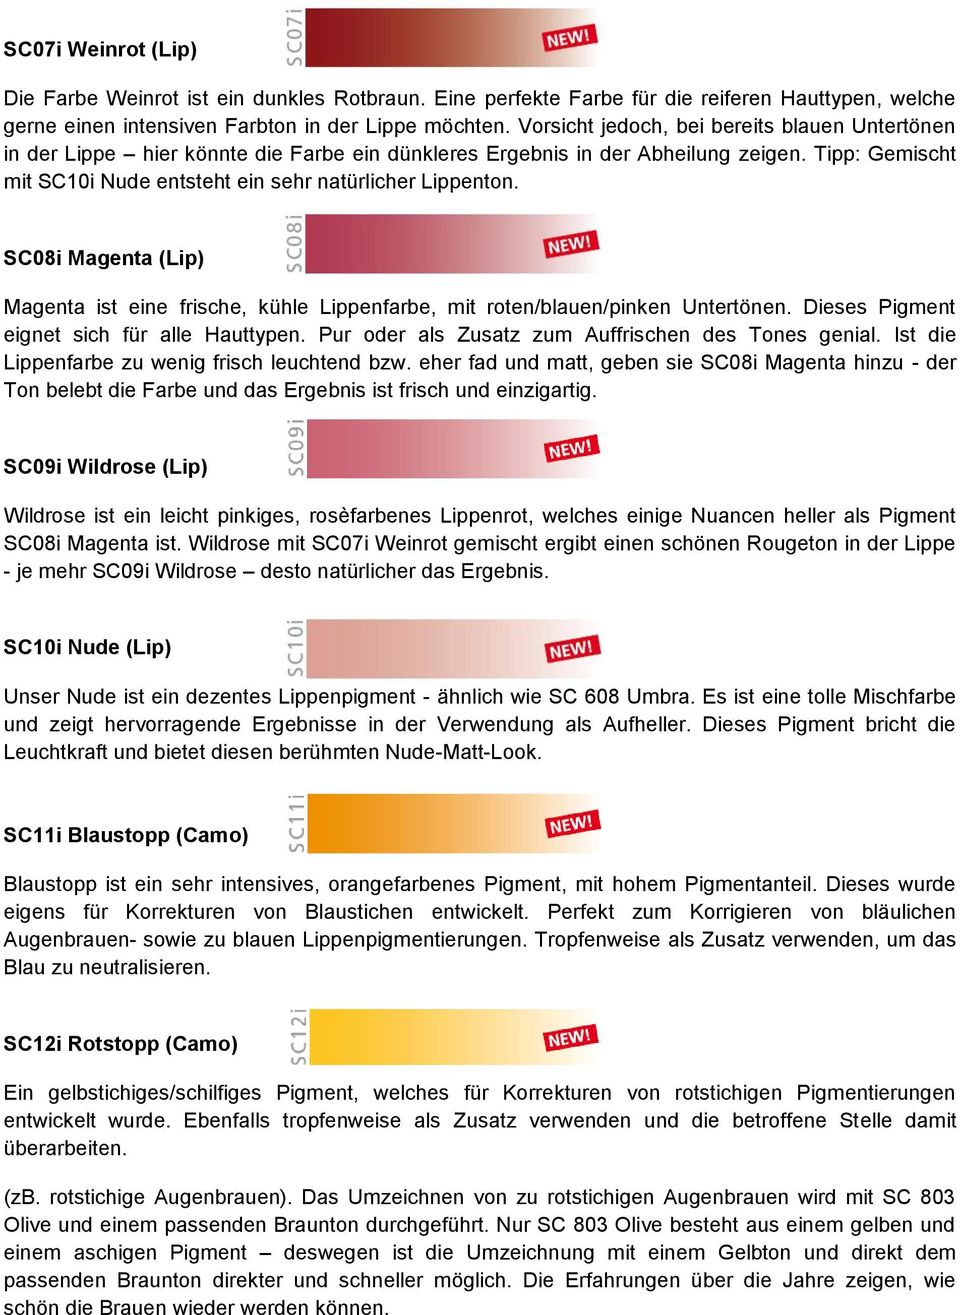 Swiss Color Mikropigmente - Farbbeschreibung - PDF Kostenfreier Download